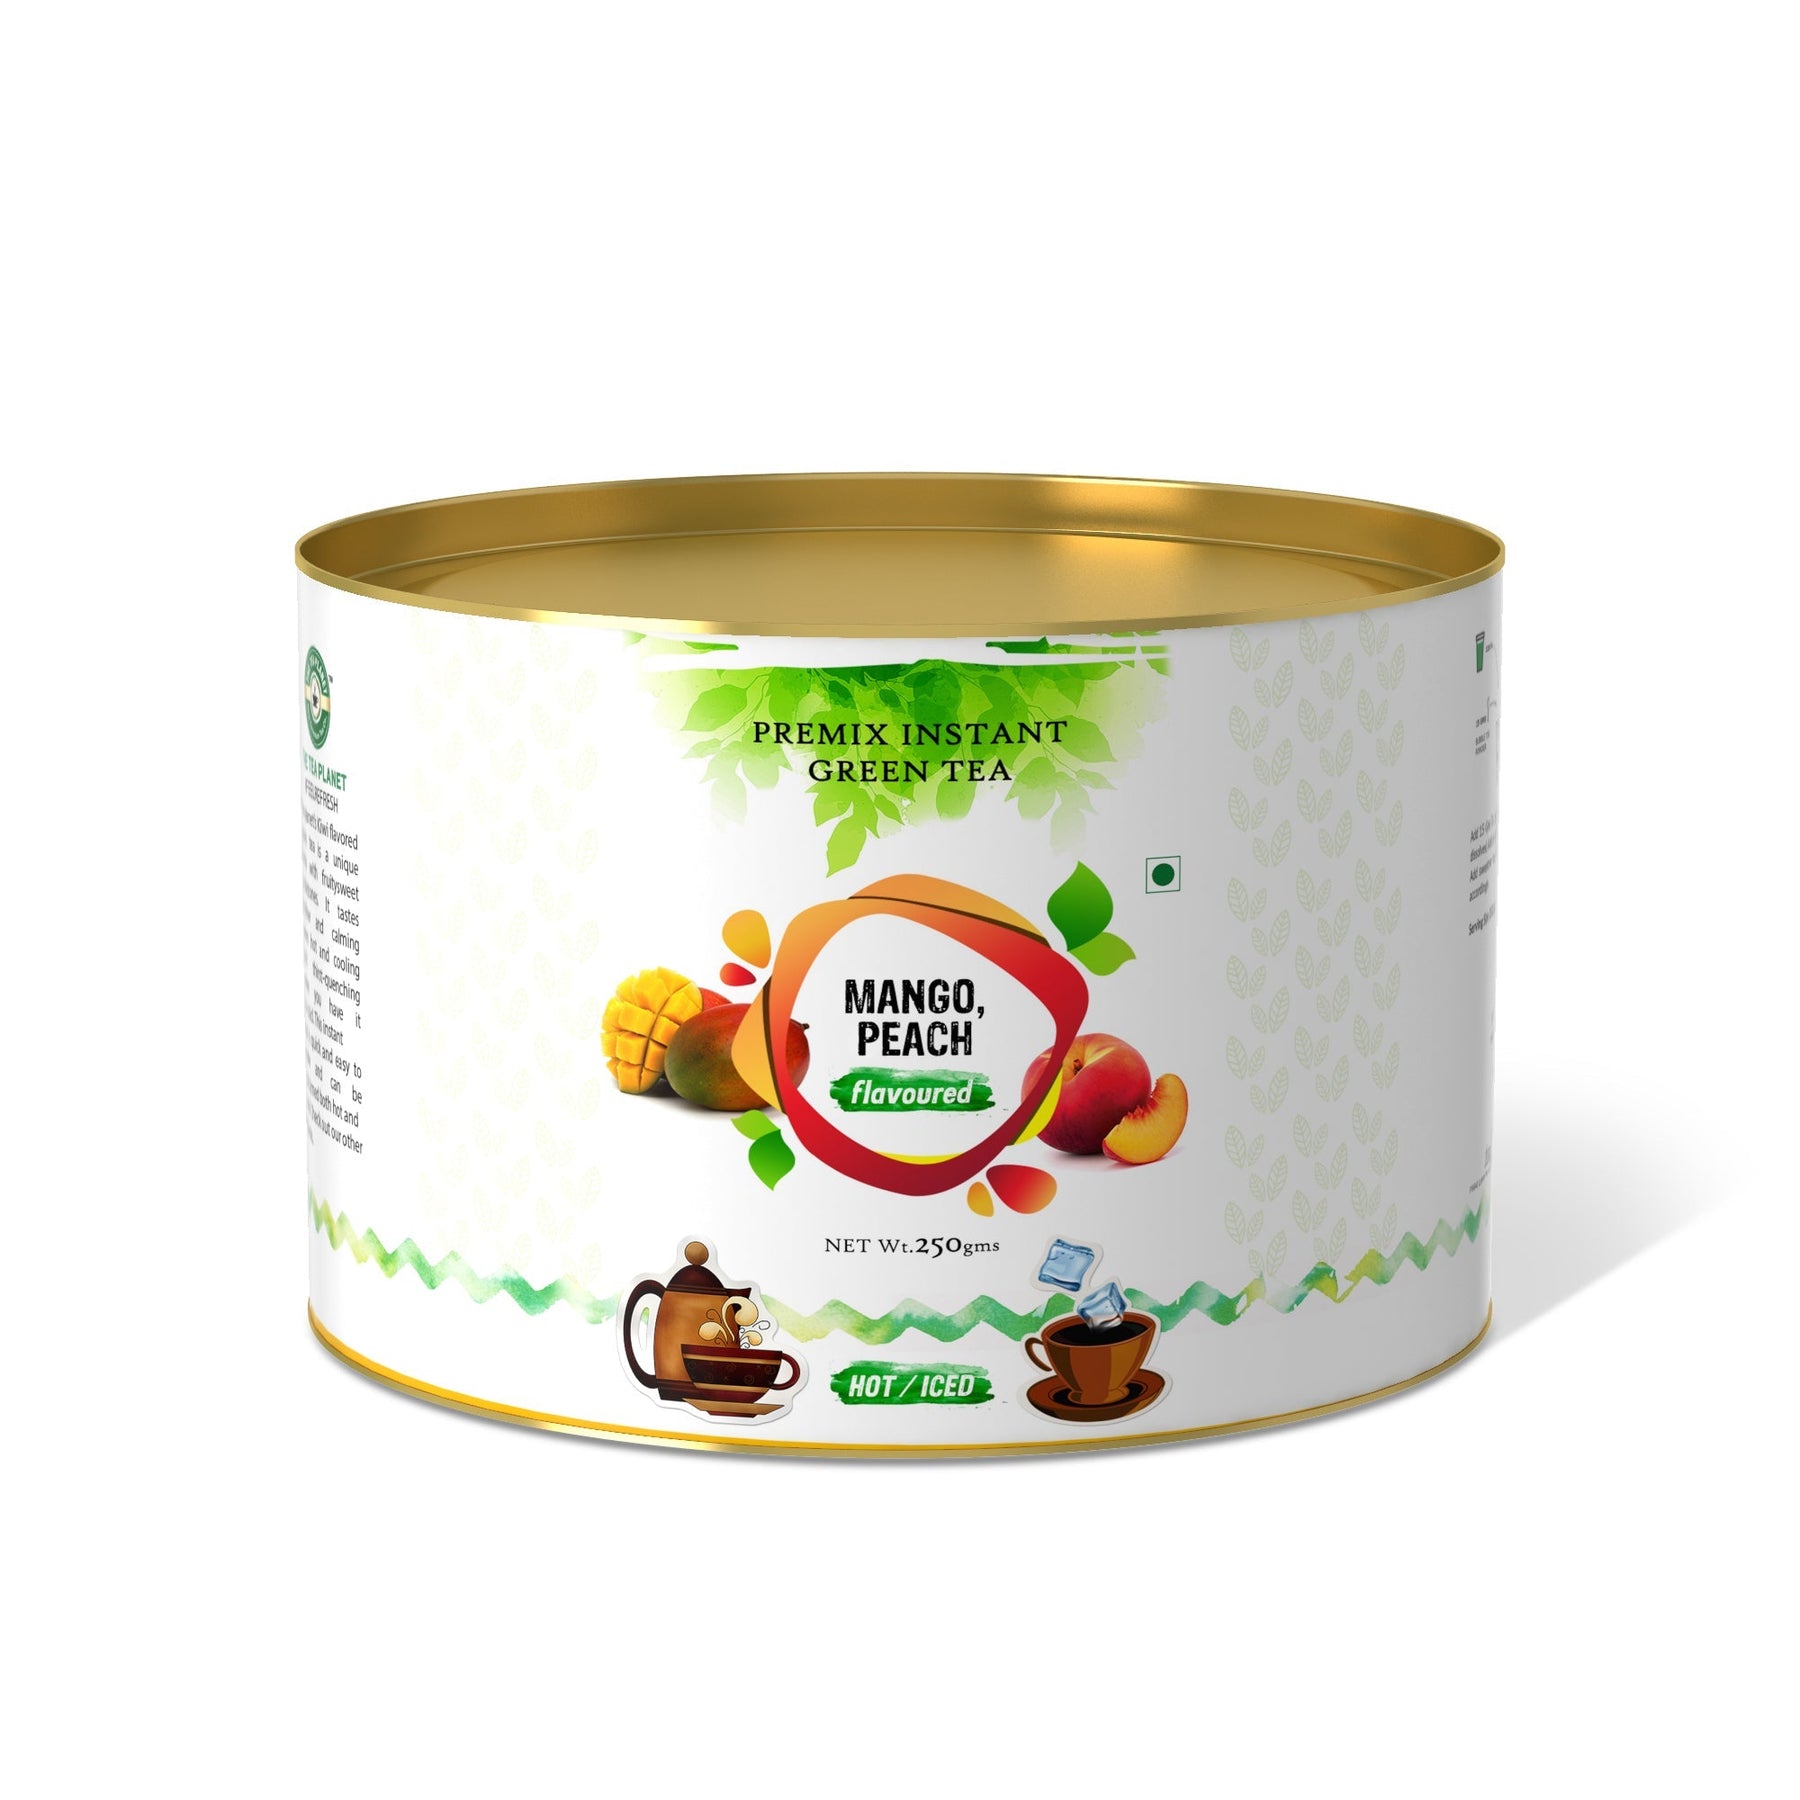 Mango & Peach Flavored Instant Green Tea - 800 gms